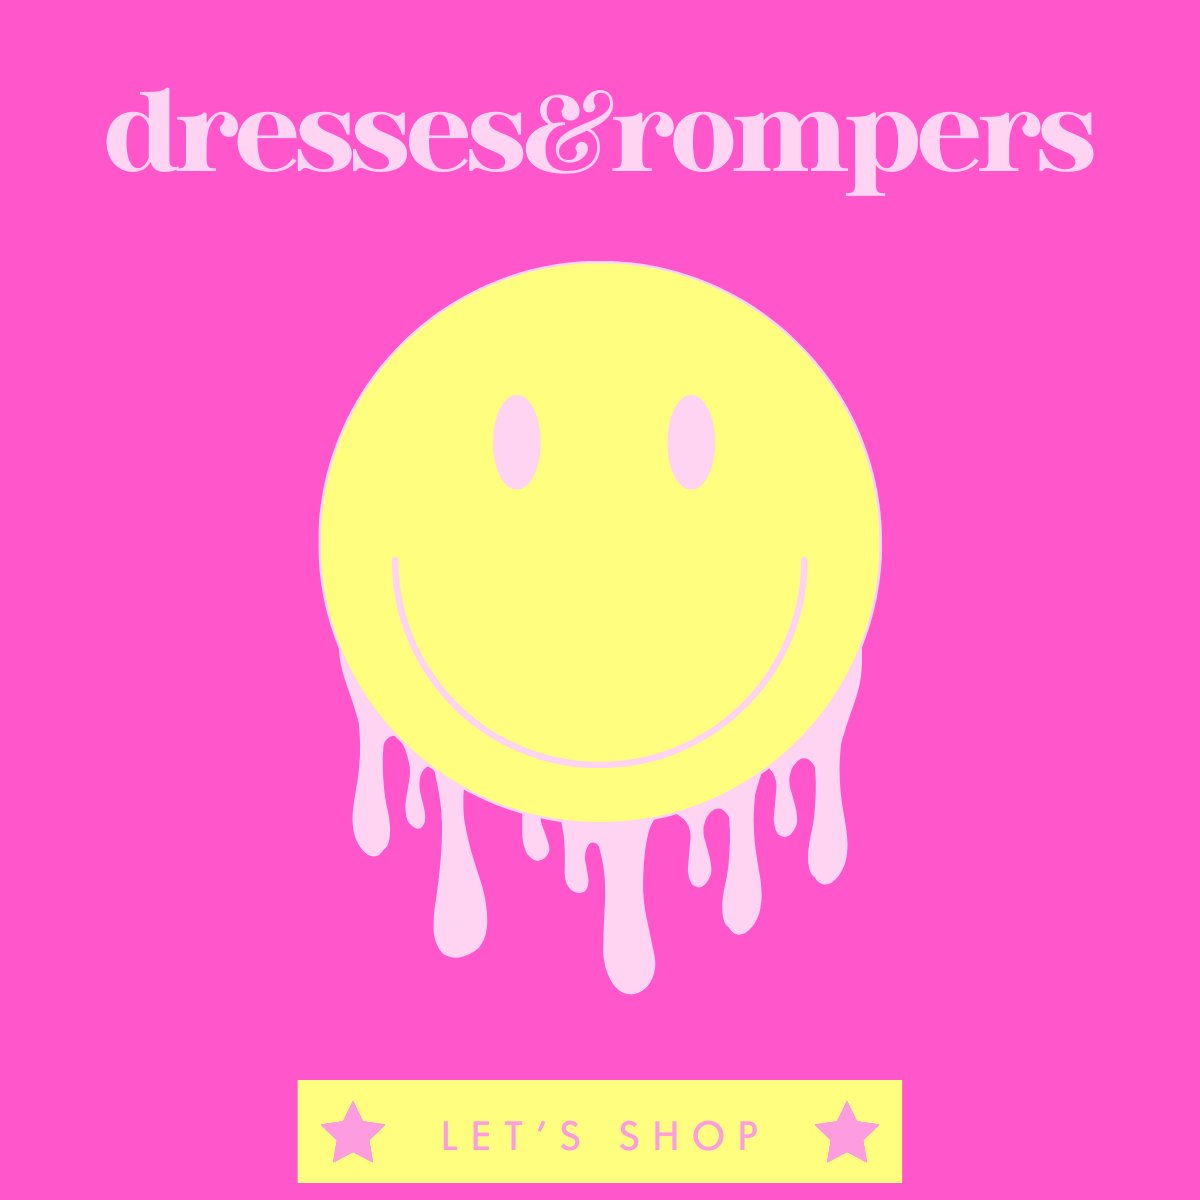 Dresses/Rompers